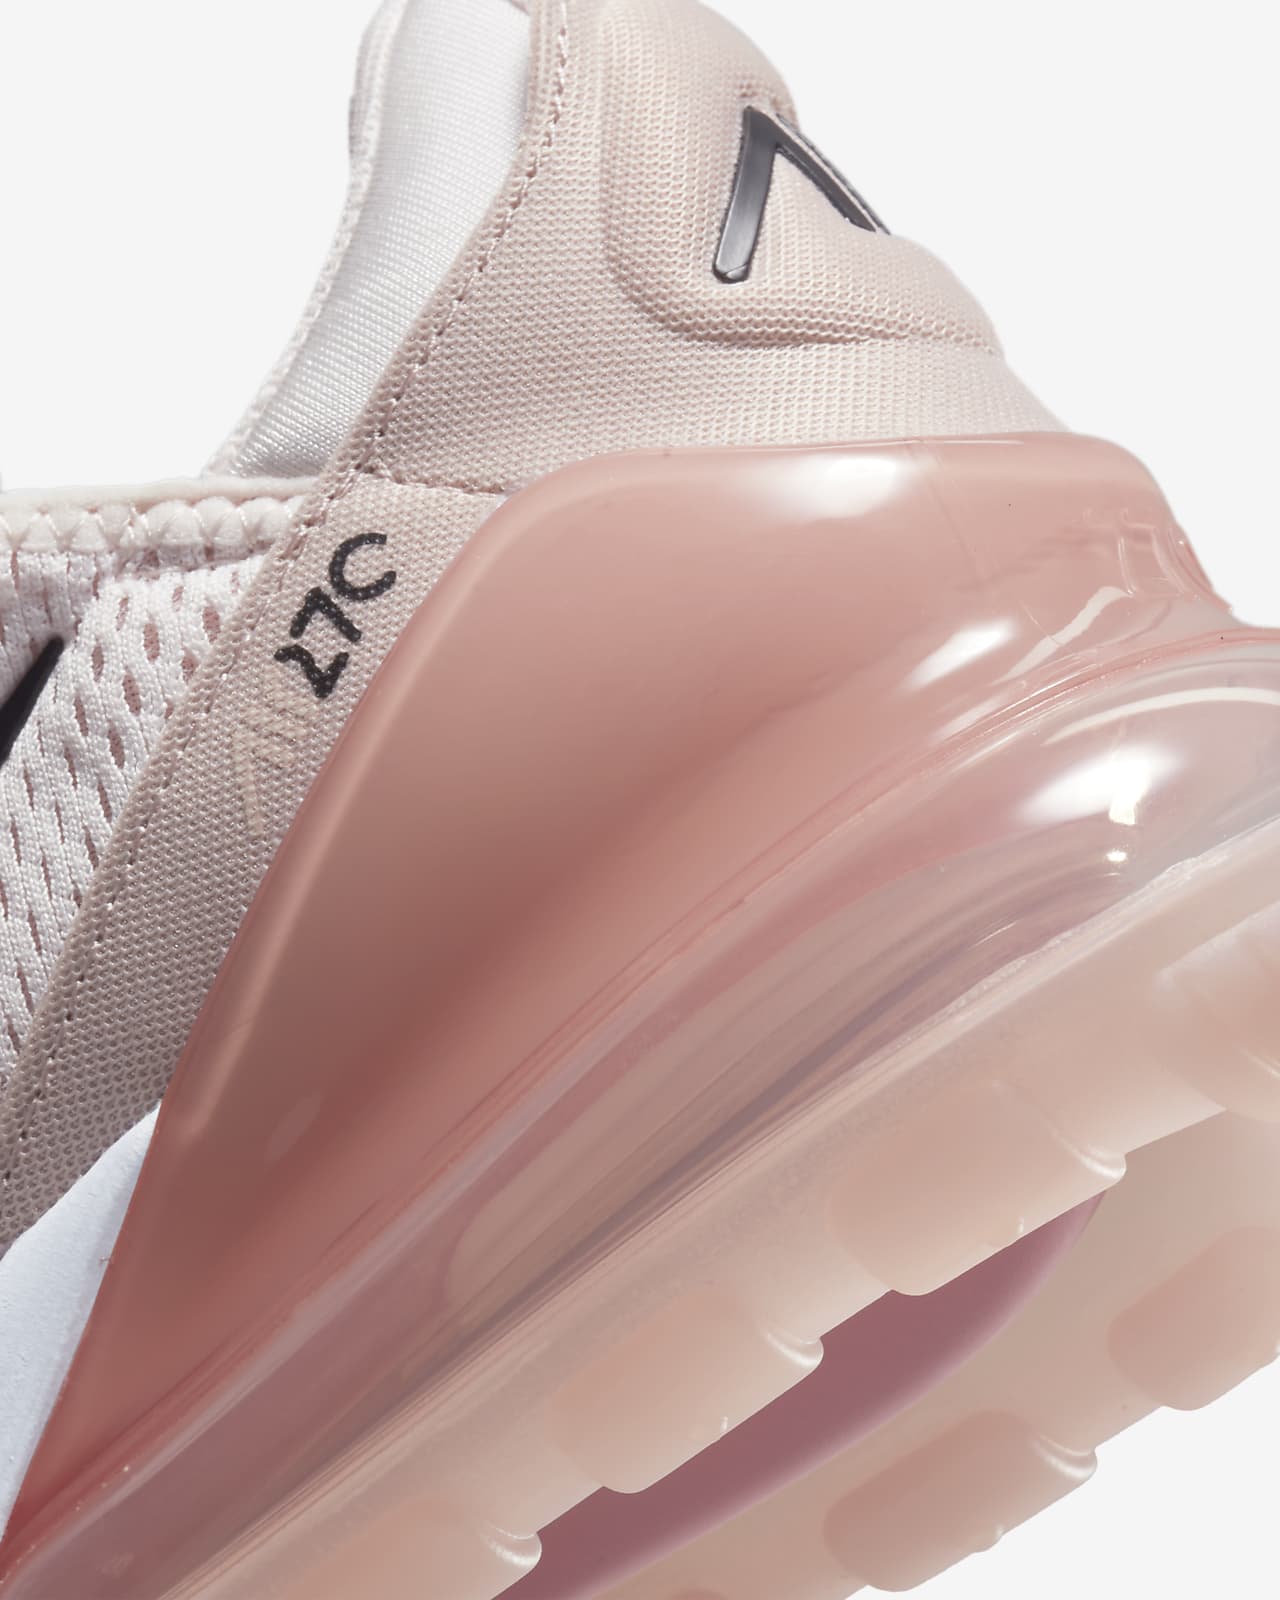 Nike Air Max 270 Light Soft Pink/Black/Pink Oxford Women's Shoe